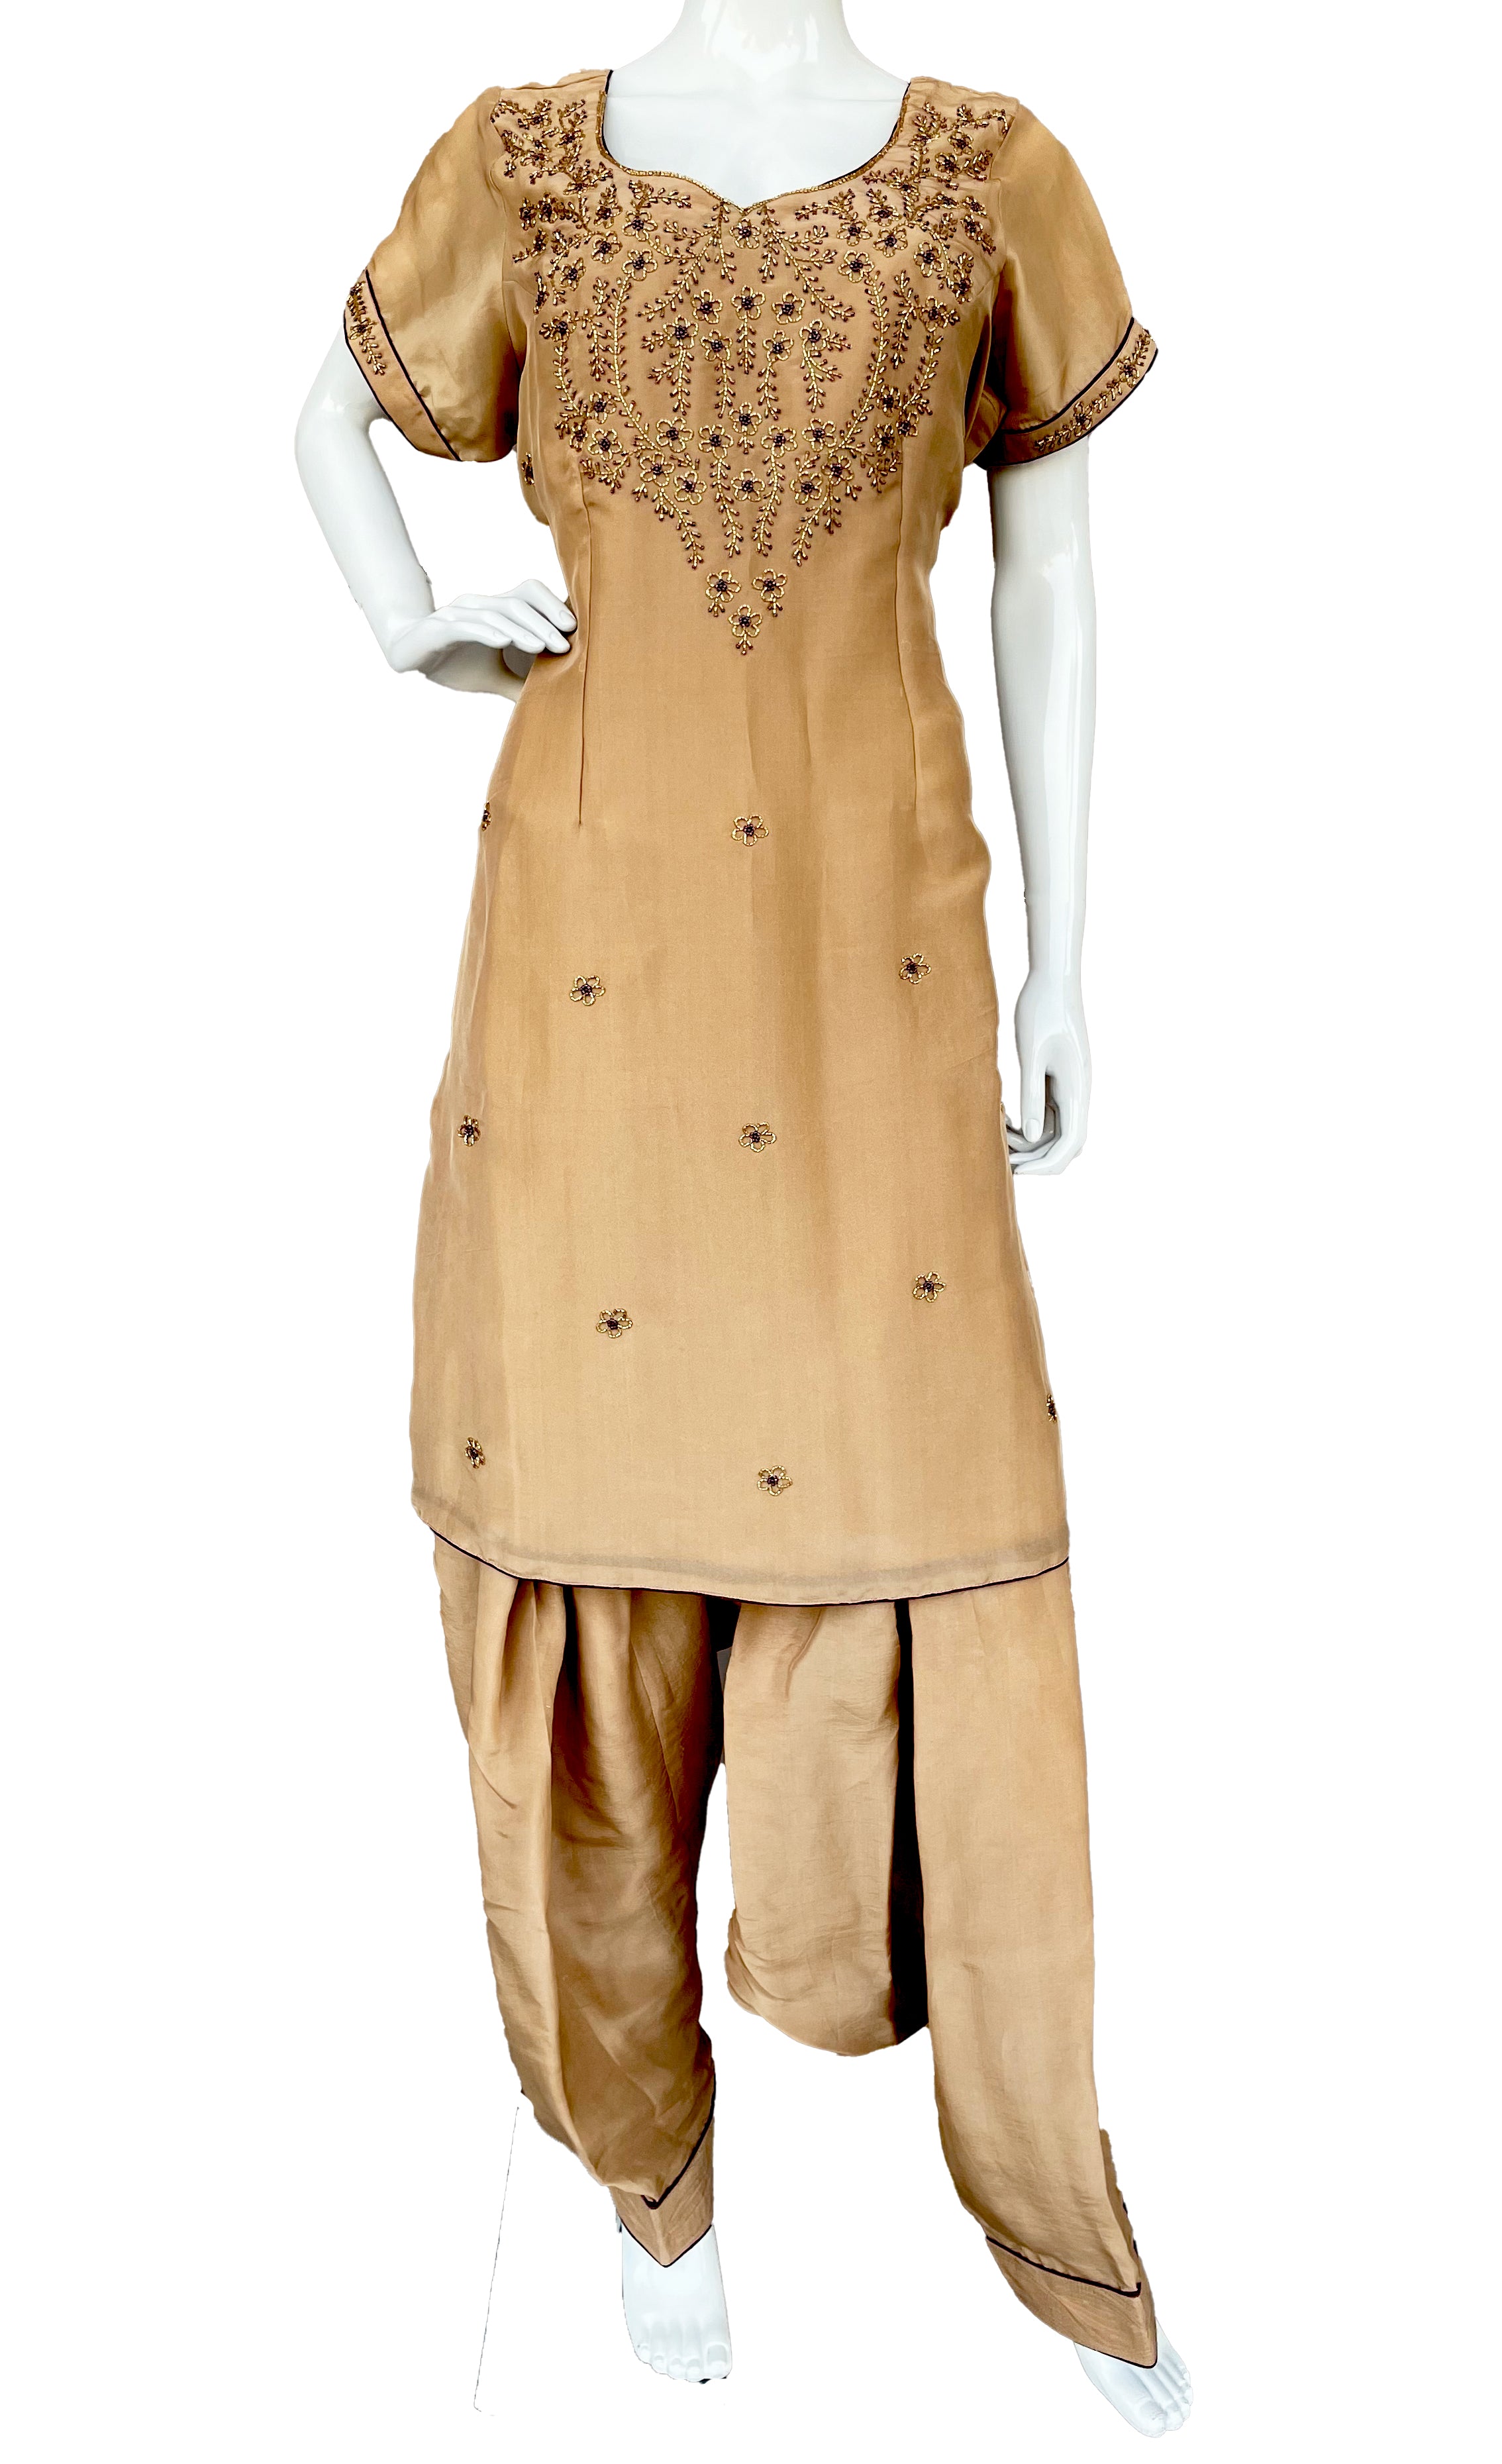 Lohri 2020: 10 Patiala Salwar Kameez Suits To Wear For The Festive Occasion